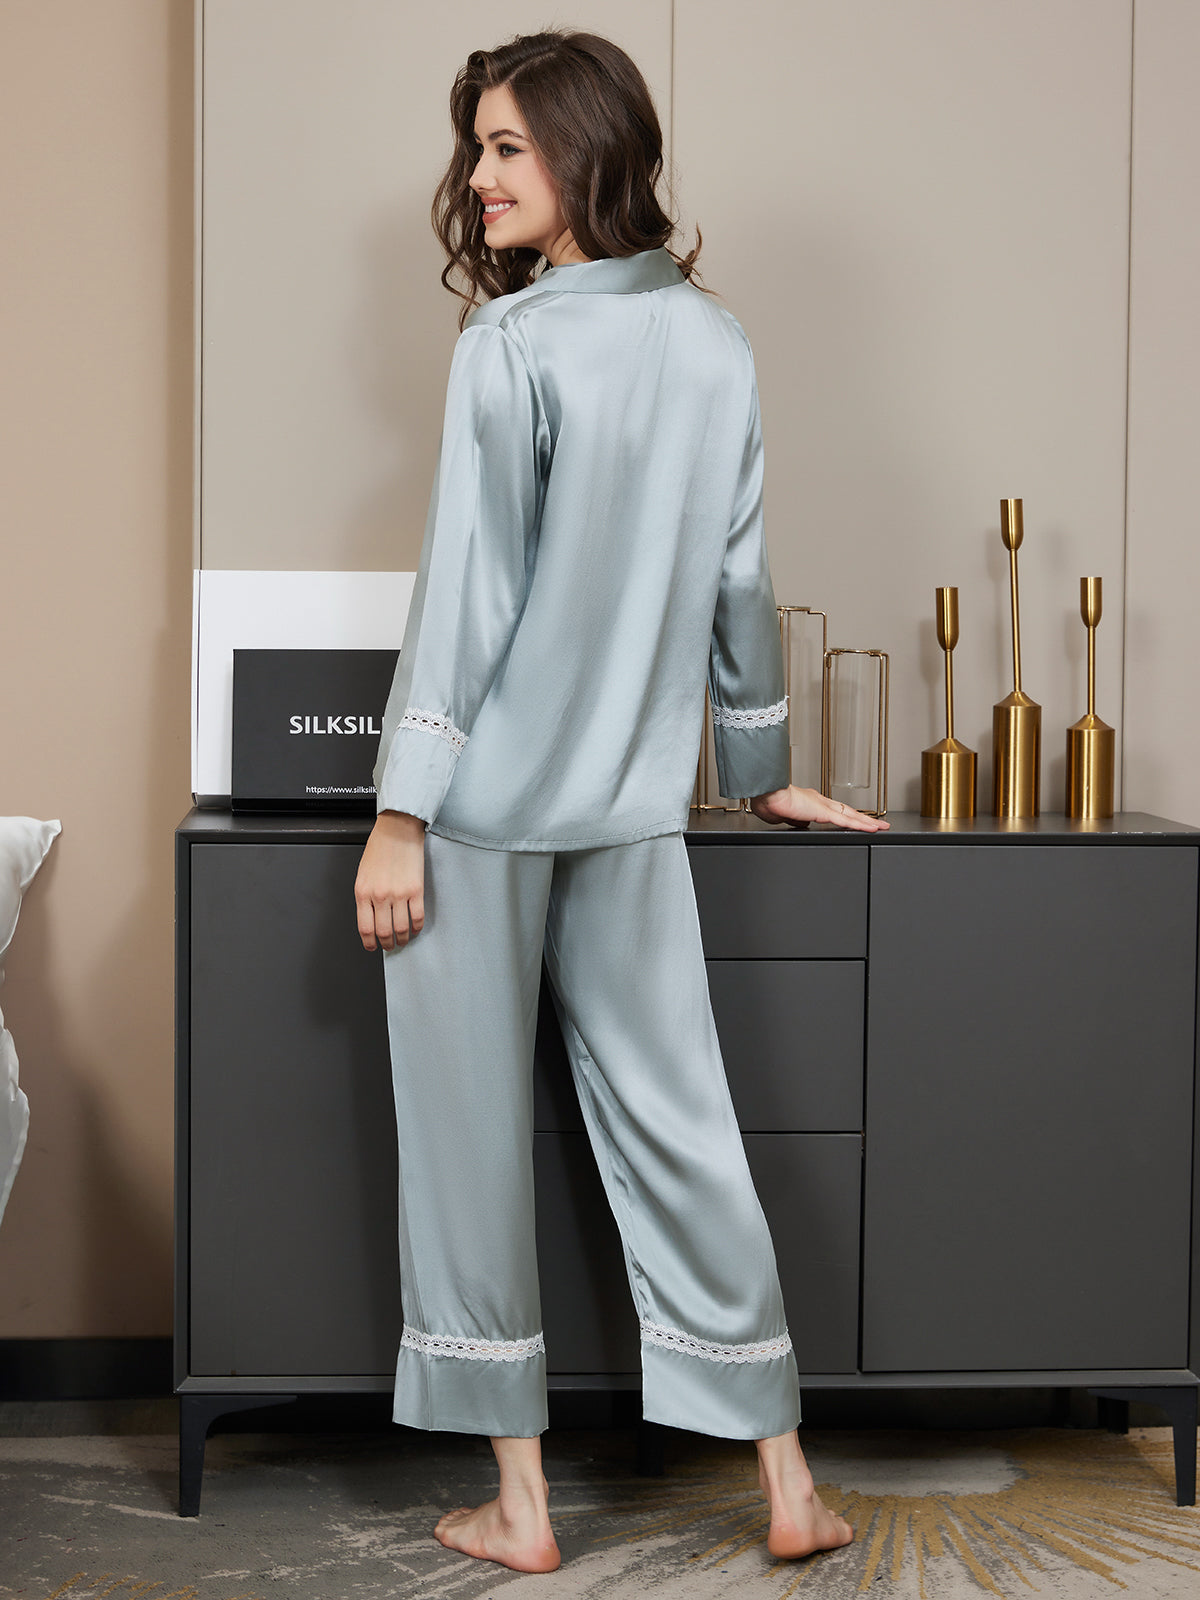 Babette - Pure Silk Classic  Pyjama Set - LOVE TO WEAR!